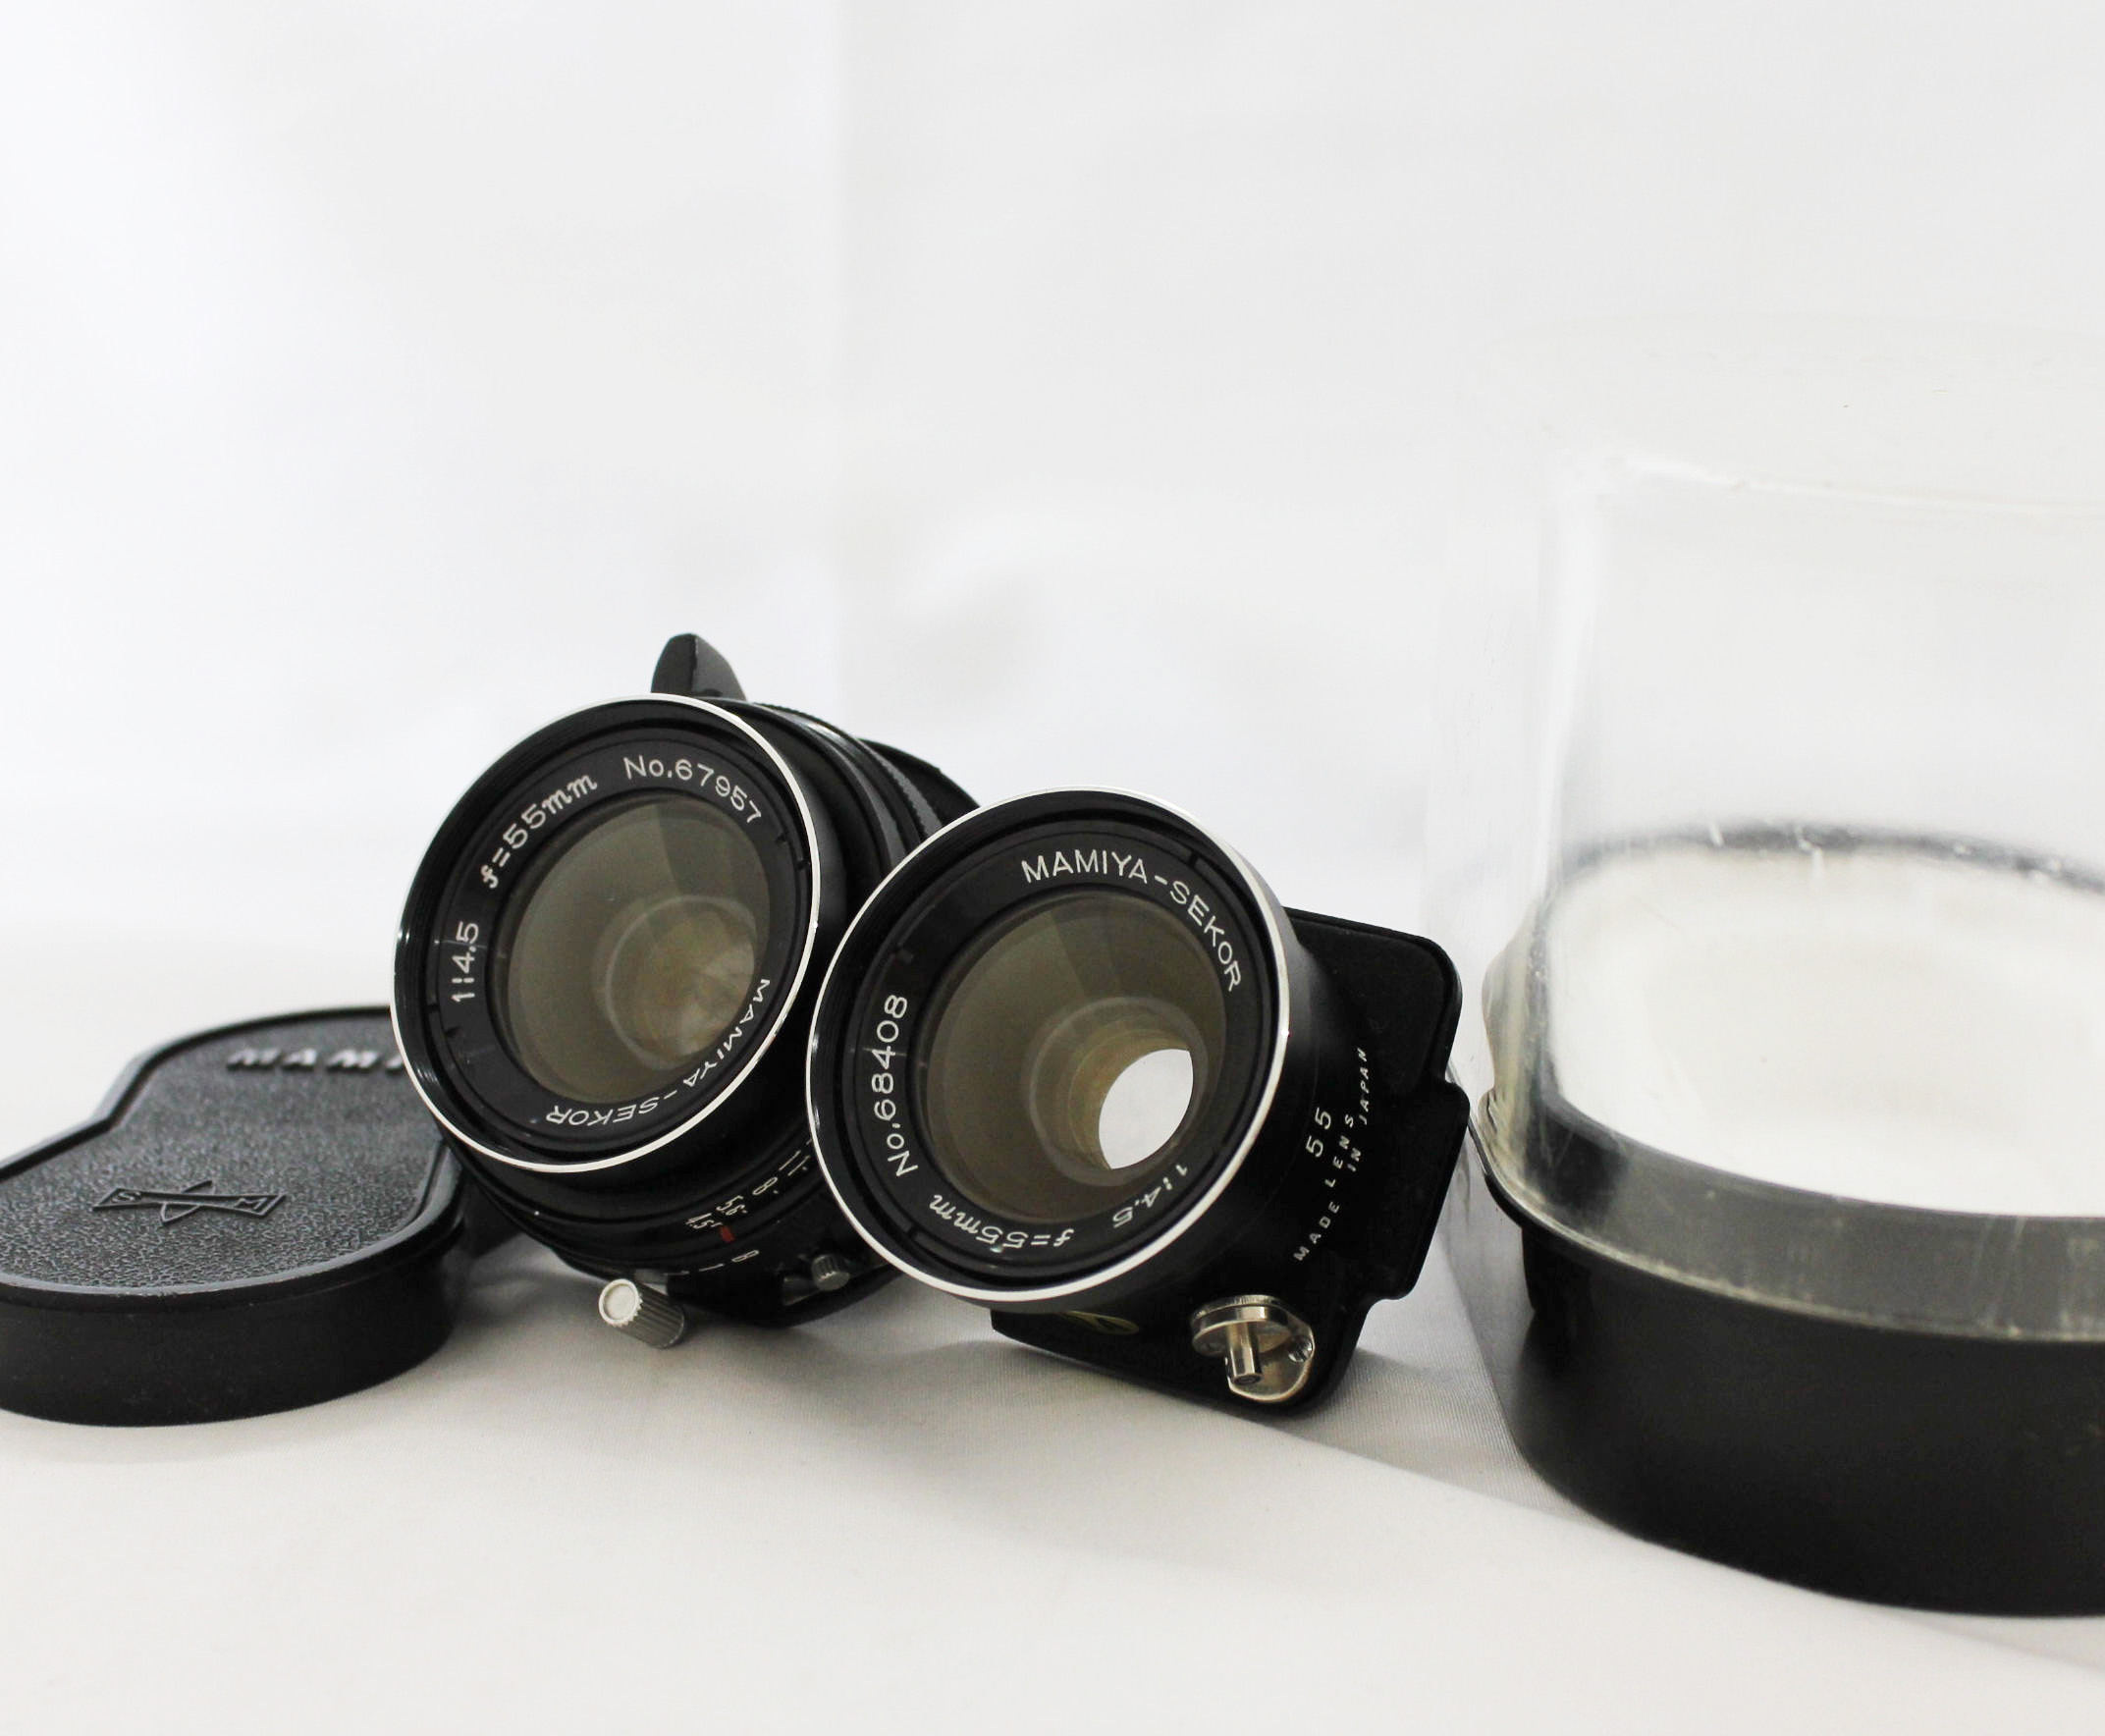 Japan Used Camera Shop | [Excellent++] Mamiya Sekor 55mm F/4.5 TLR Lens for C3 C33 C220 C330 from Japan